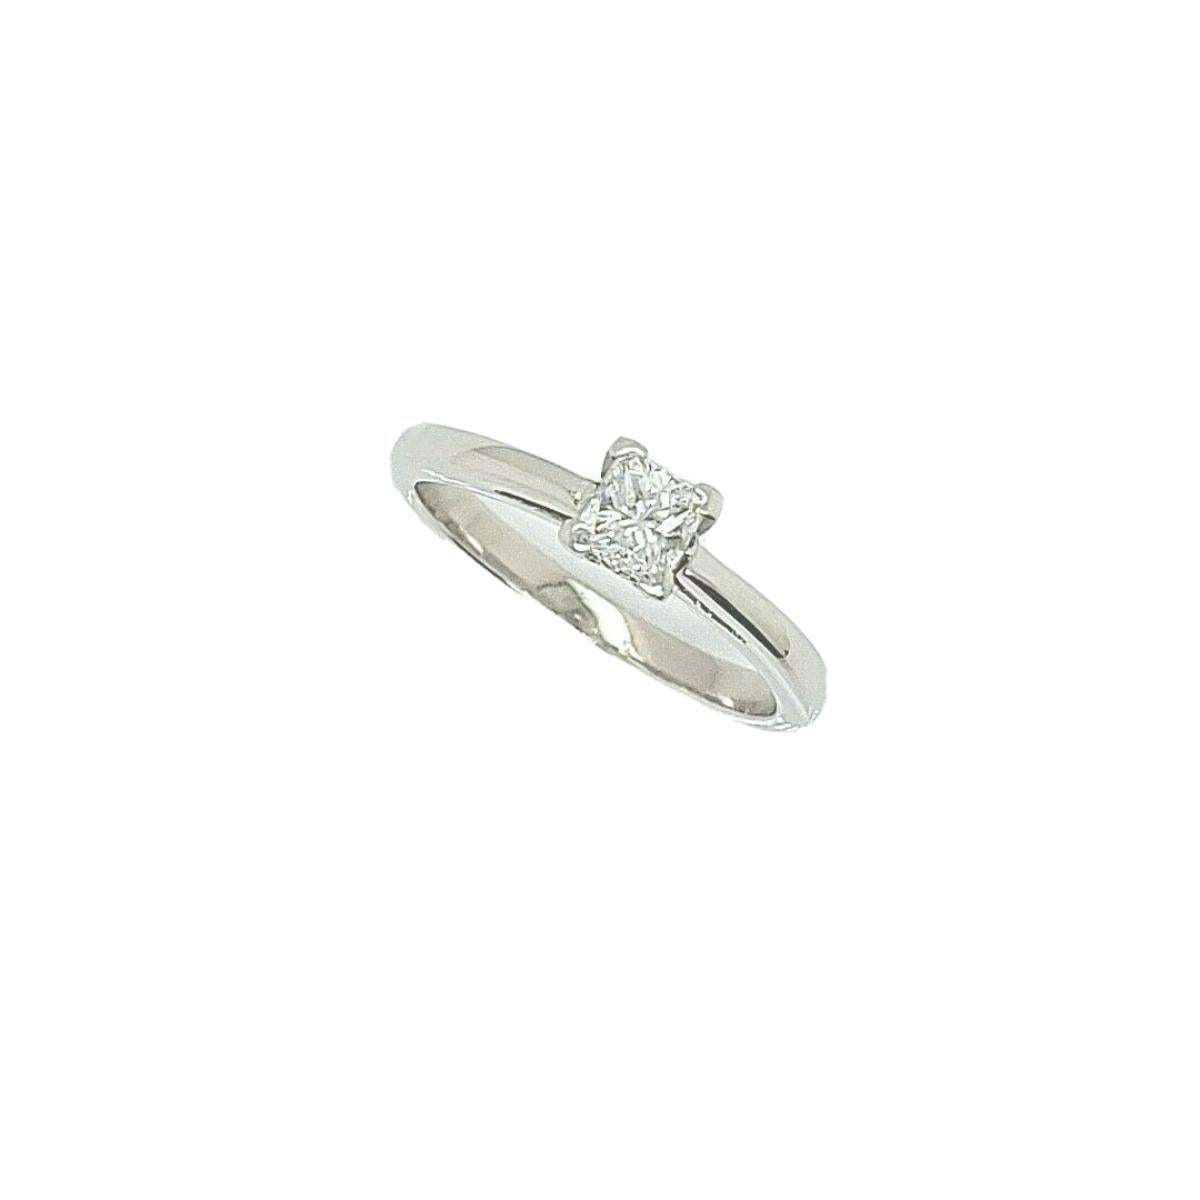 0.35ct F/VS1 Princess Cut Diamond Ring Set In Platinum

Additional Information: 
Total Diamond Weight: 0.35ct
Diamond Colour: F
Diamond Clarity: VS
Width of Band: 2.28mm
Width of Head: 4.77mm
Length of Head: 4.68mm
Total Weight: 4.3g
Ring Size: